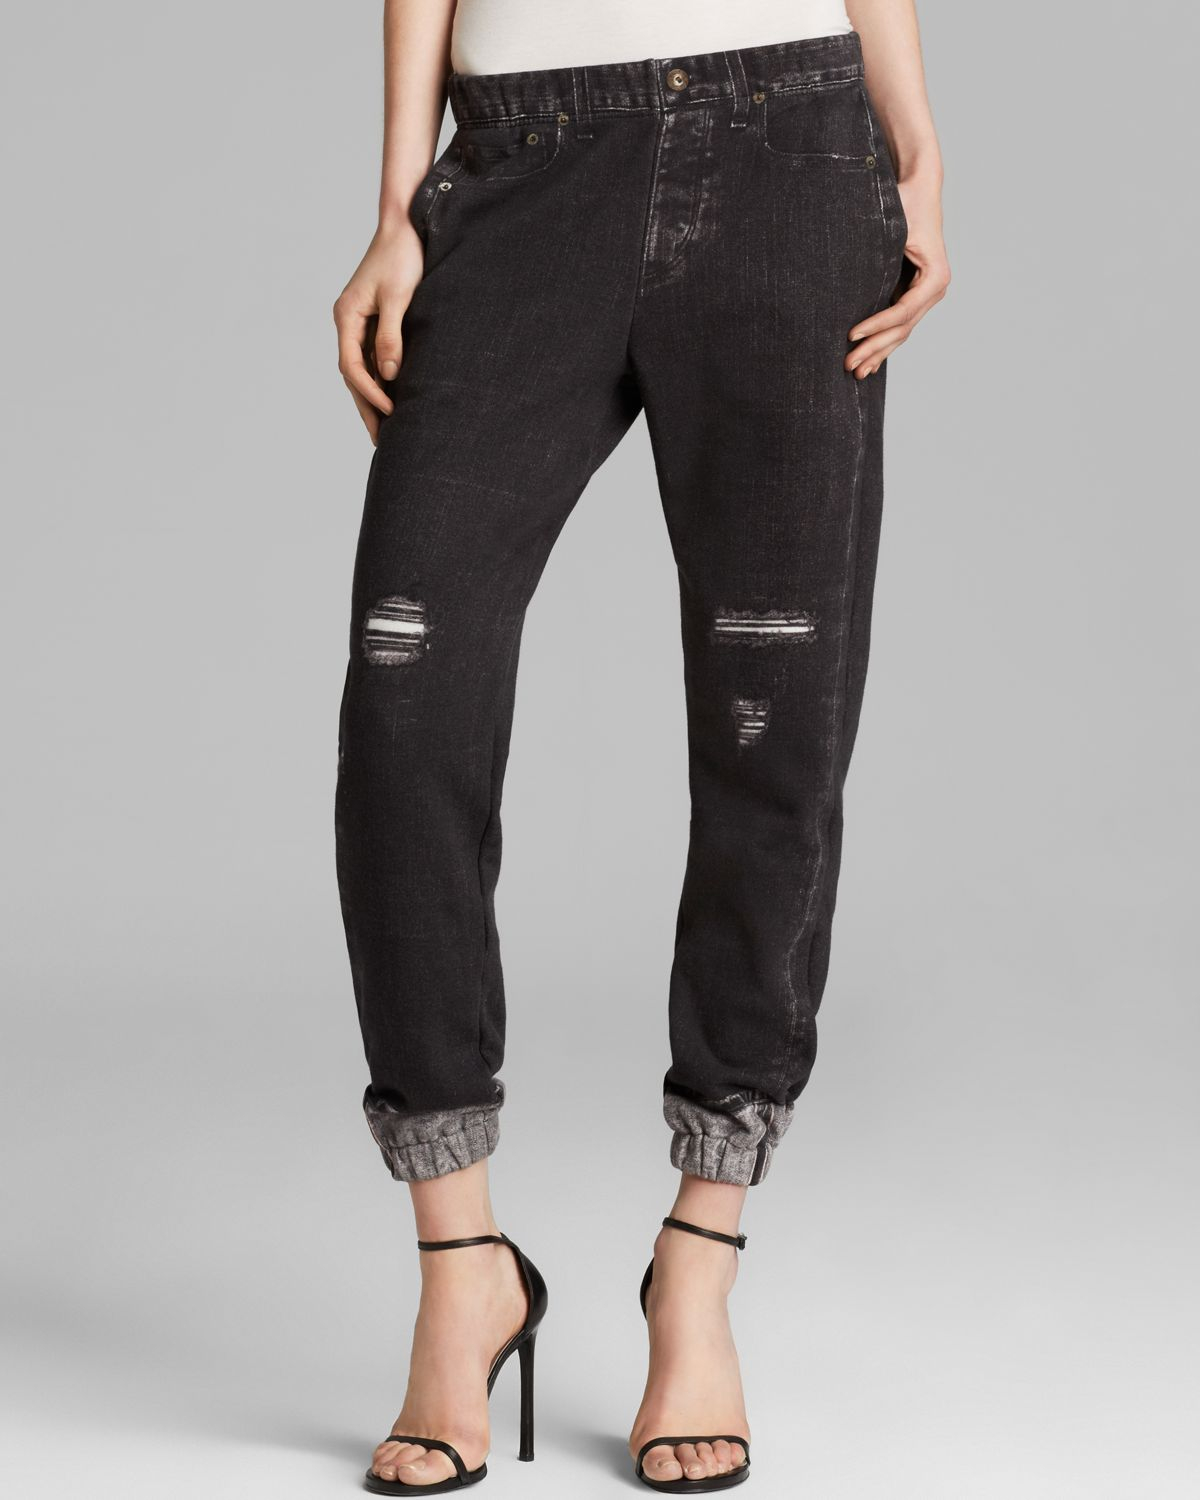 Rag & Bone Sweatpants - Miramar Pajama Jean in Black/Grey (Black) - Lyst